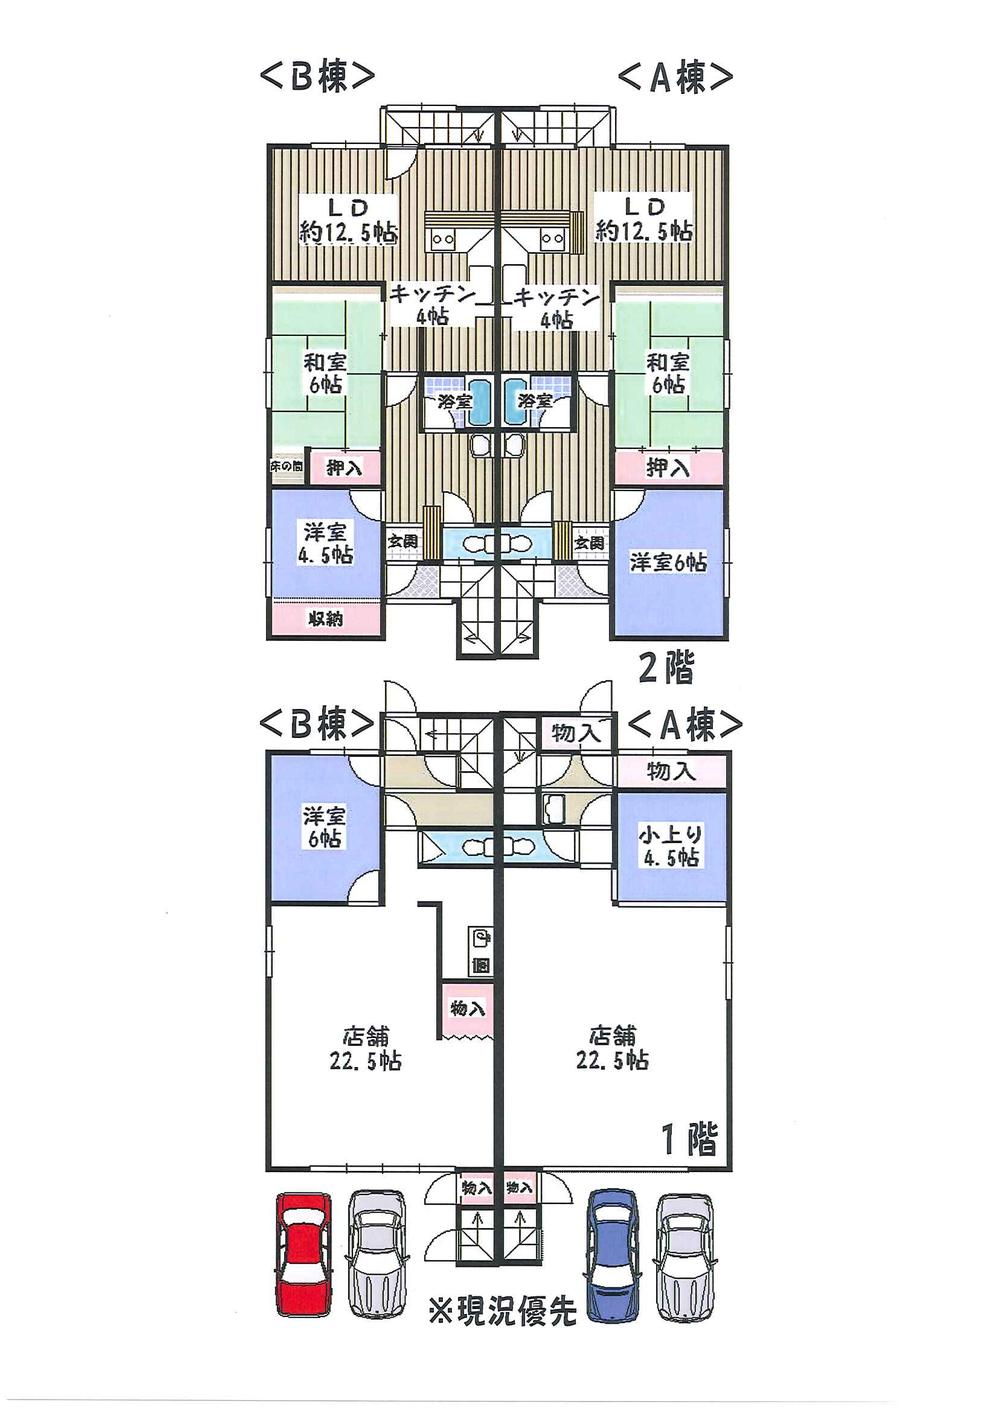 Floor plan. 7.4 million yen, 3LDK + S (storeroom), Land area 109.37 sq m , Building area 118.66 sq m A ・ Building B Floor